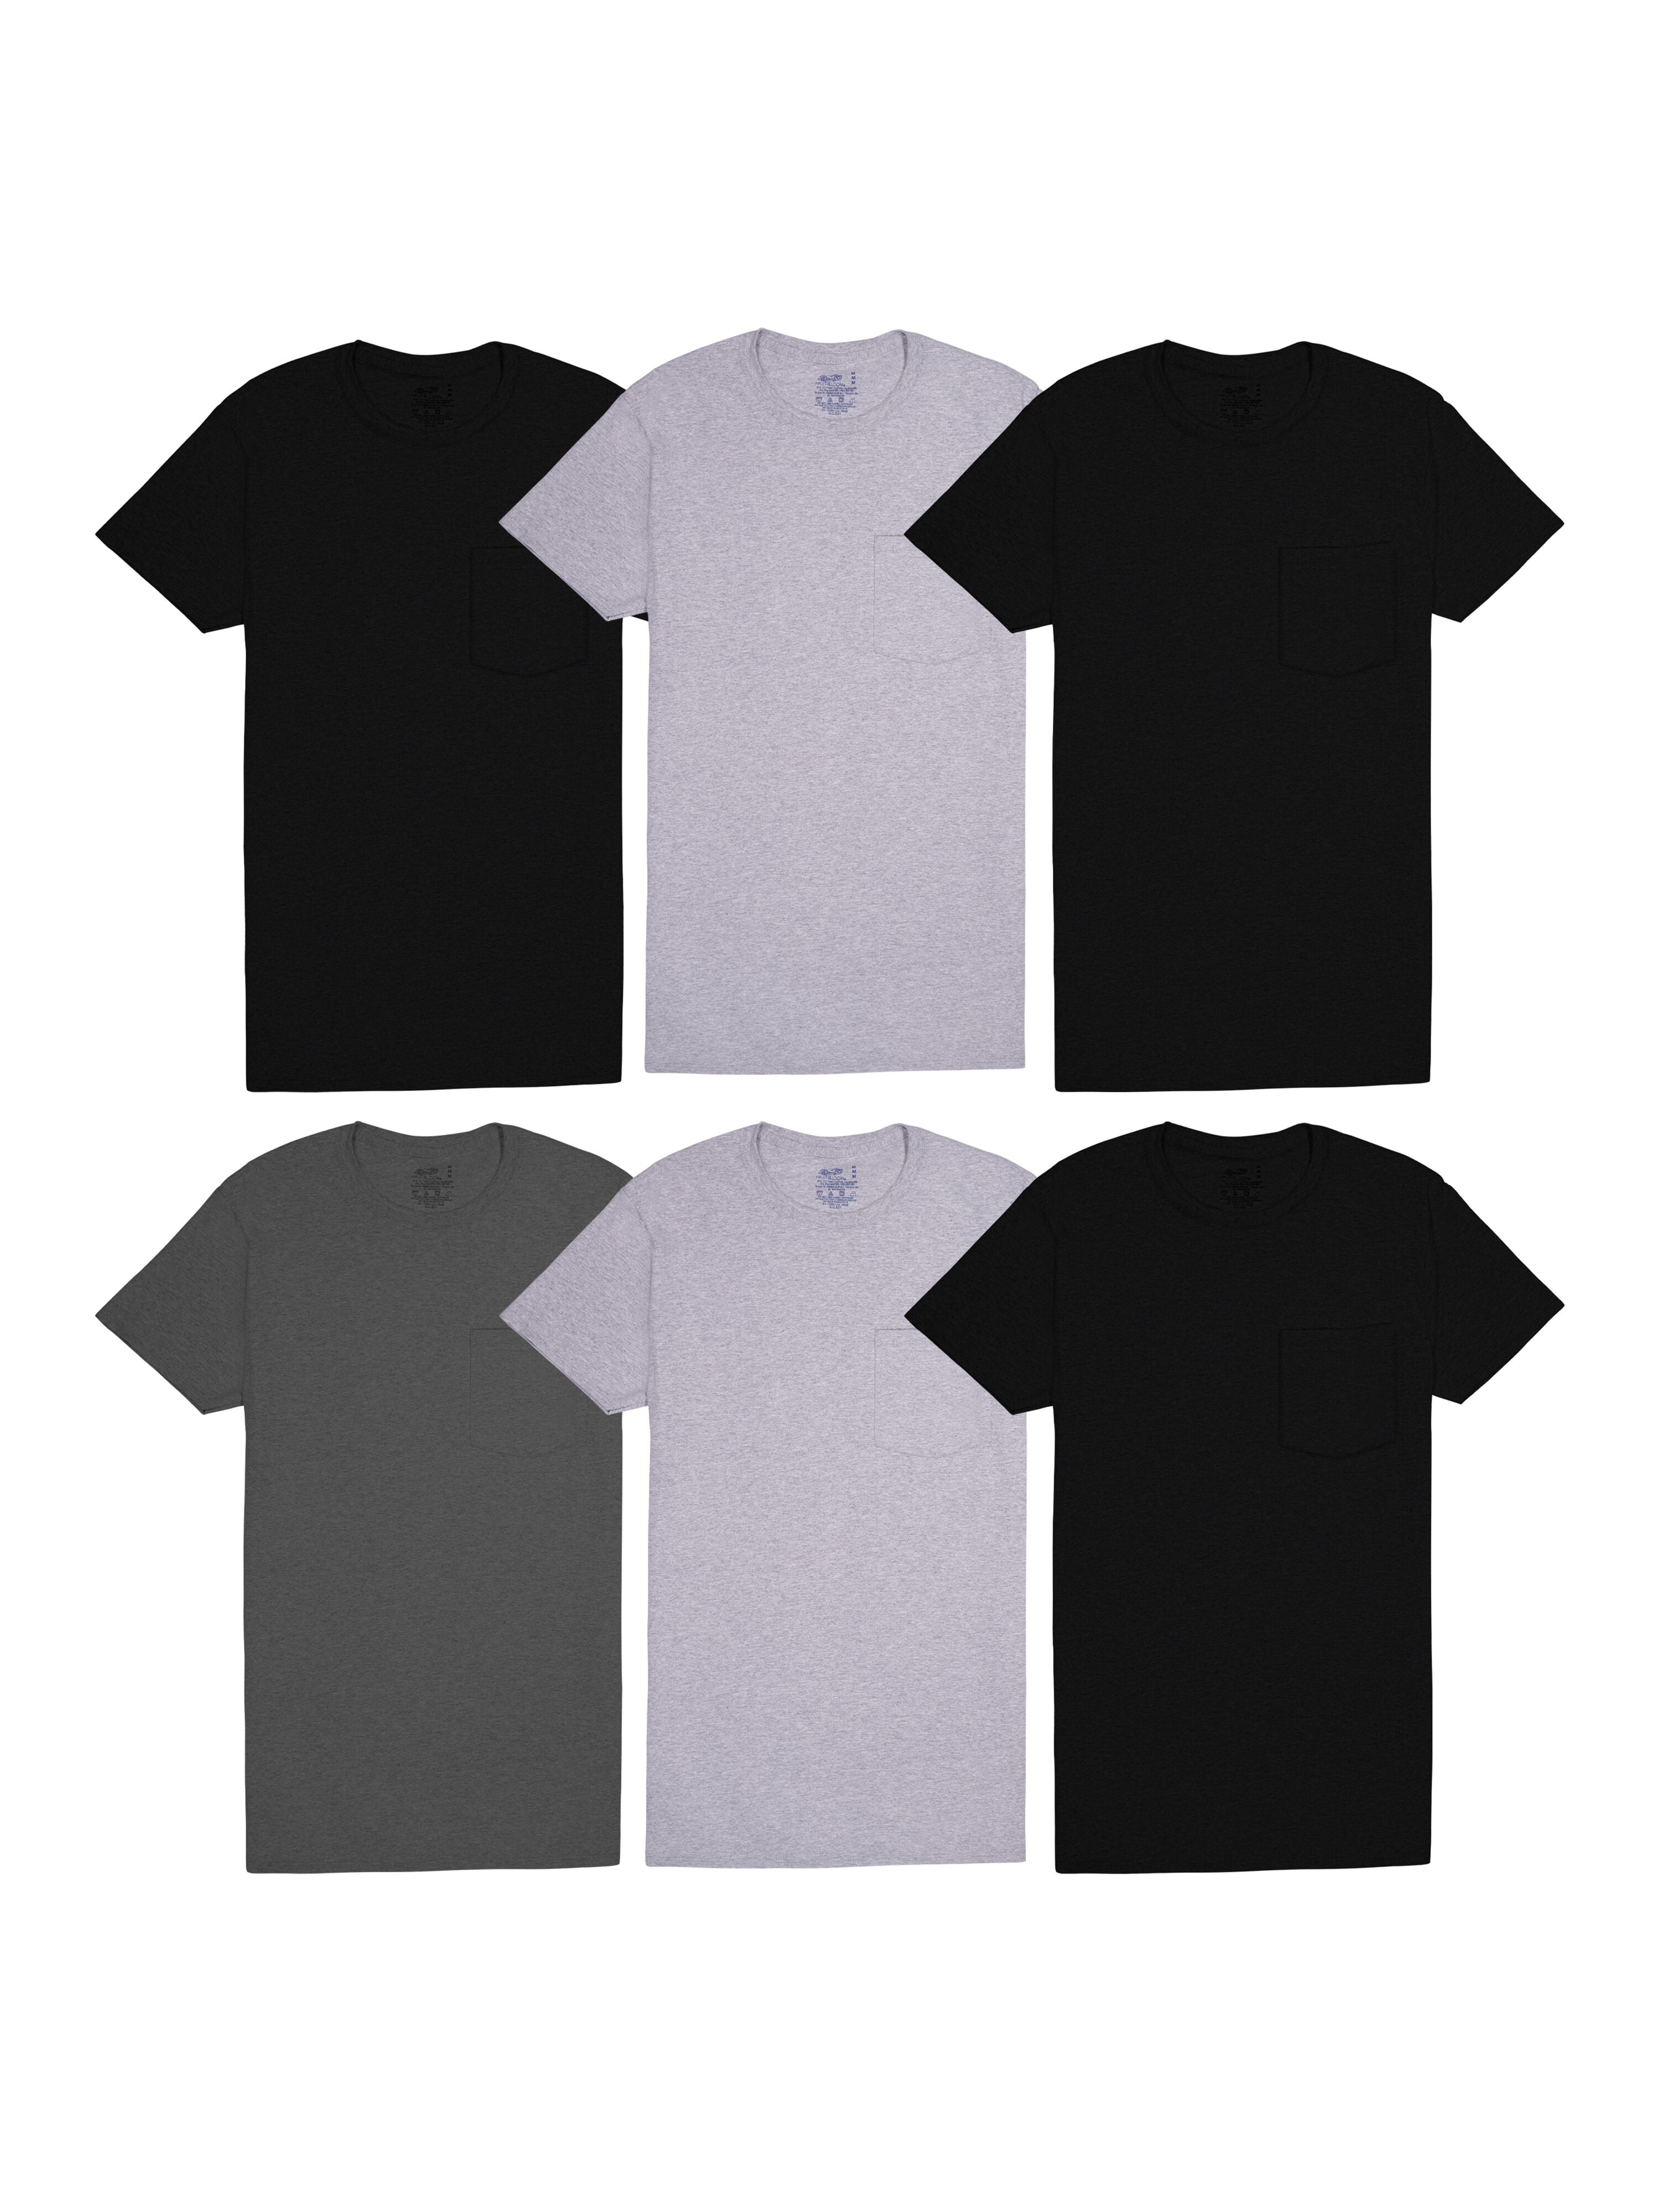 New 10pk BLACK FOTL Mens T Shirt Plain Original 100% Cotton Blank Tee Bulk Buy 